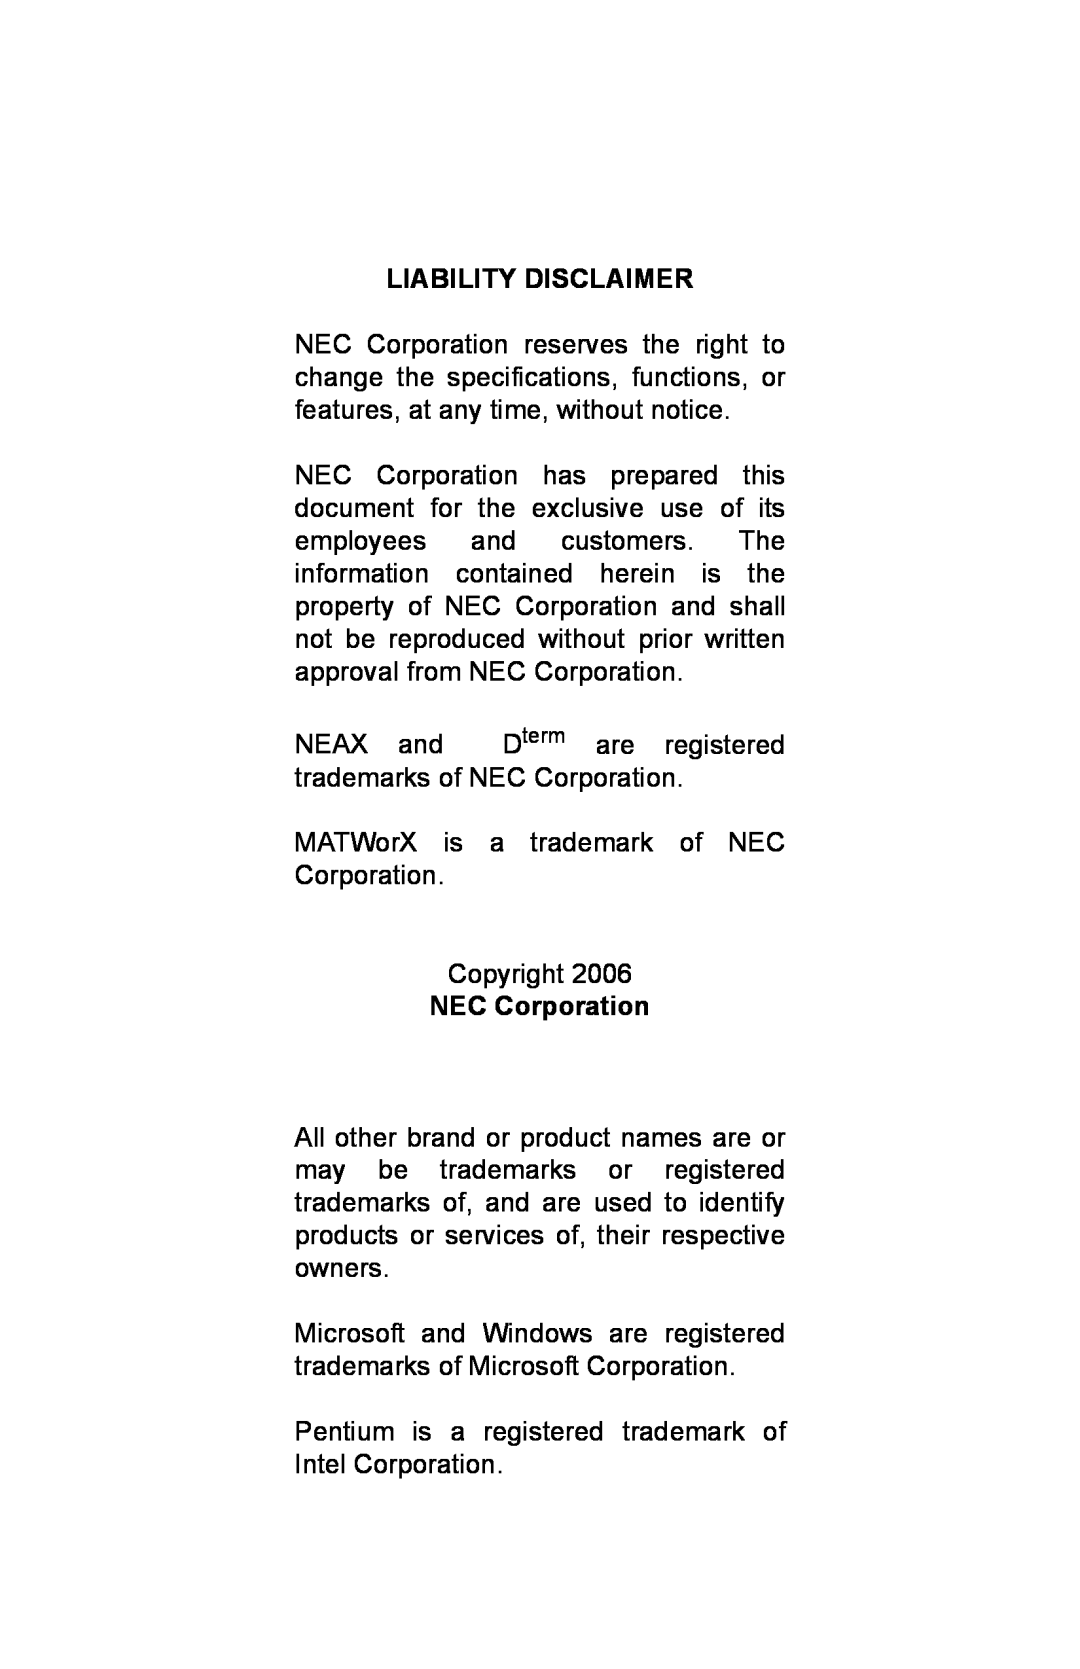 NEC NWA-008862-001 manual Liability Disclaimer, NEC Corporation 